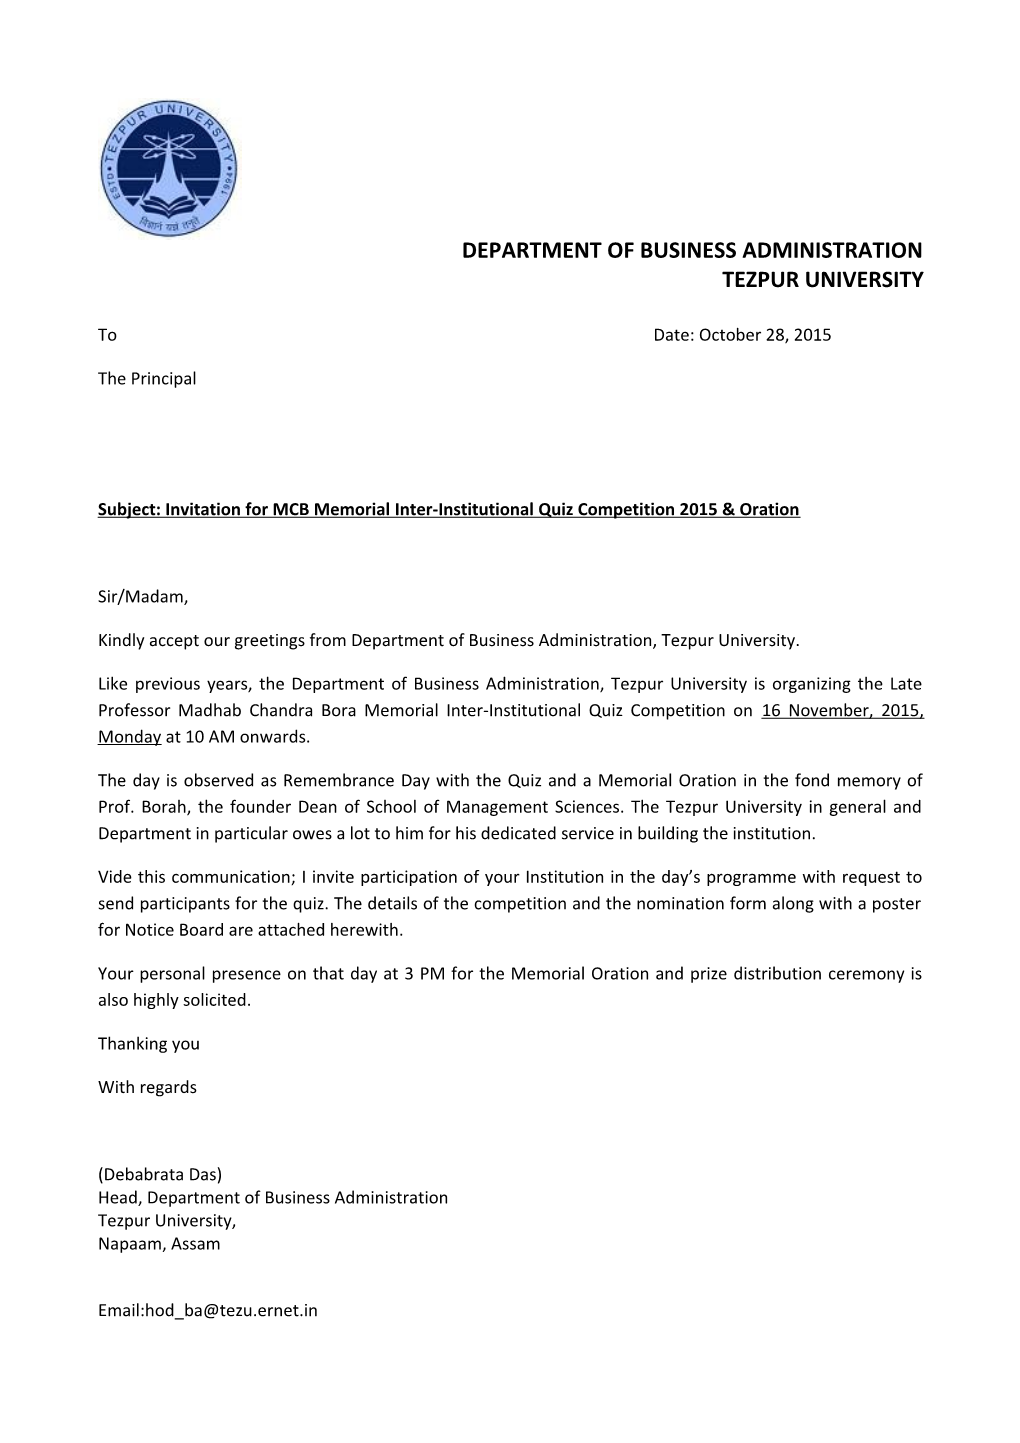 Subject: Invitation for MCB Memorial Inter-Institutional Quiz Competition 2015 & Oration